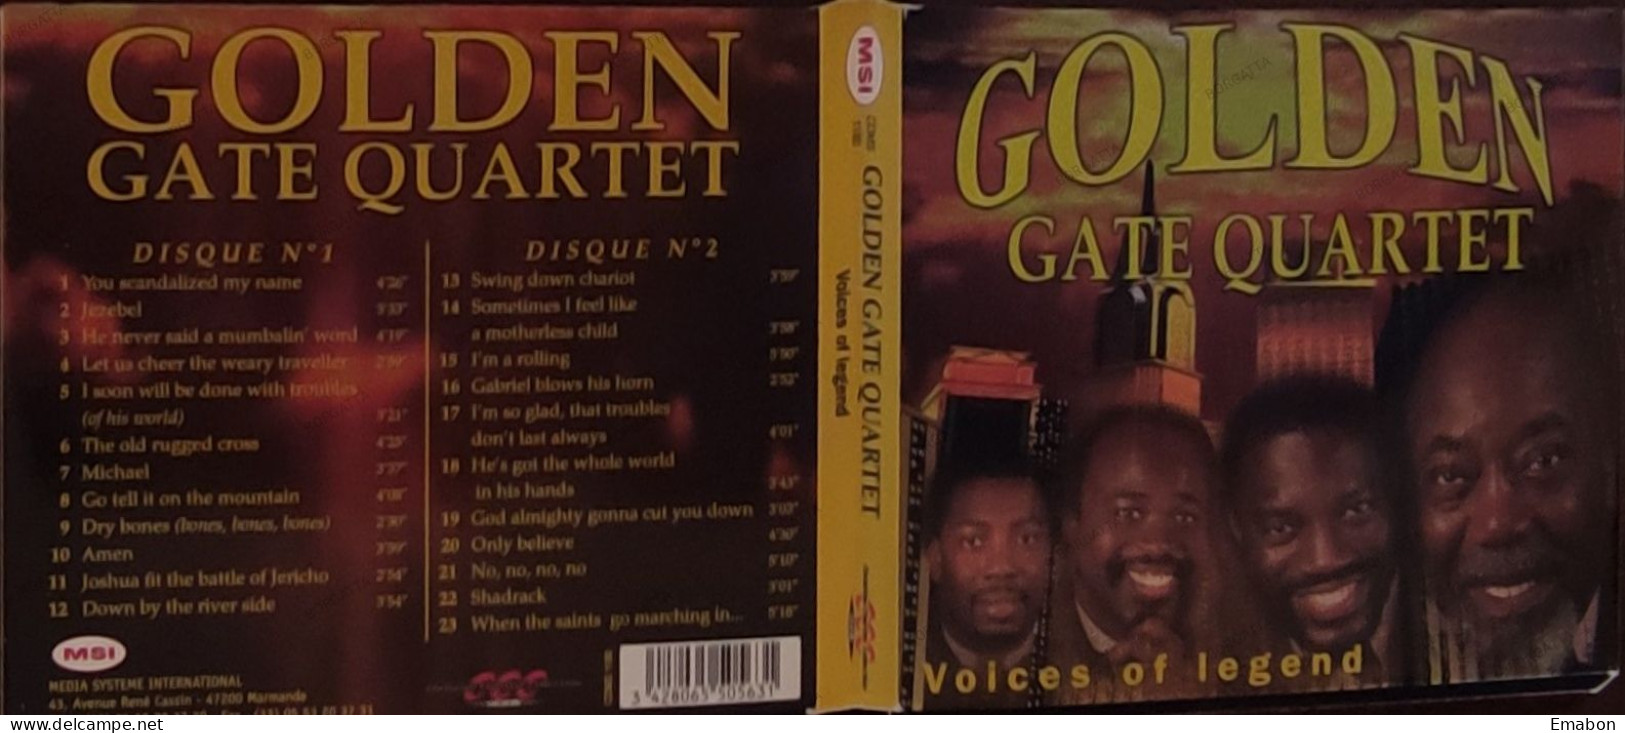 BORGATTA - GOSPEL - Cd GOLDEN GATE QUARTET  - VOICES OF LEGEND -  MSI MUSIC 1998 -  USATO In Buono Stato - Canciones Religiosas Y  Gospels